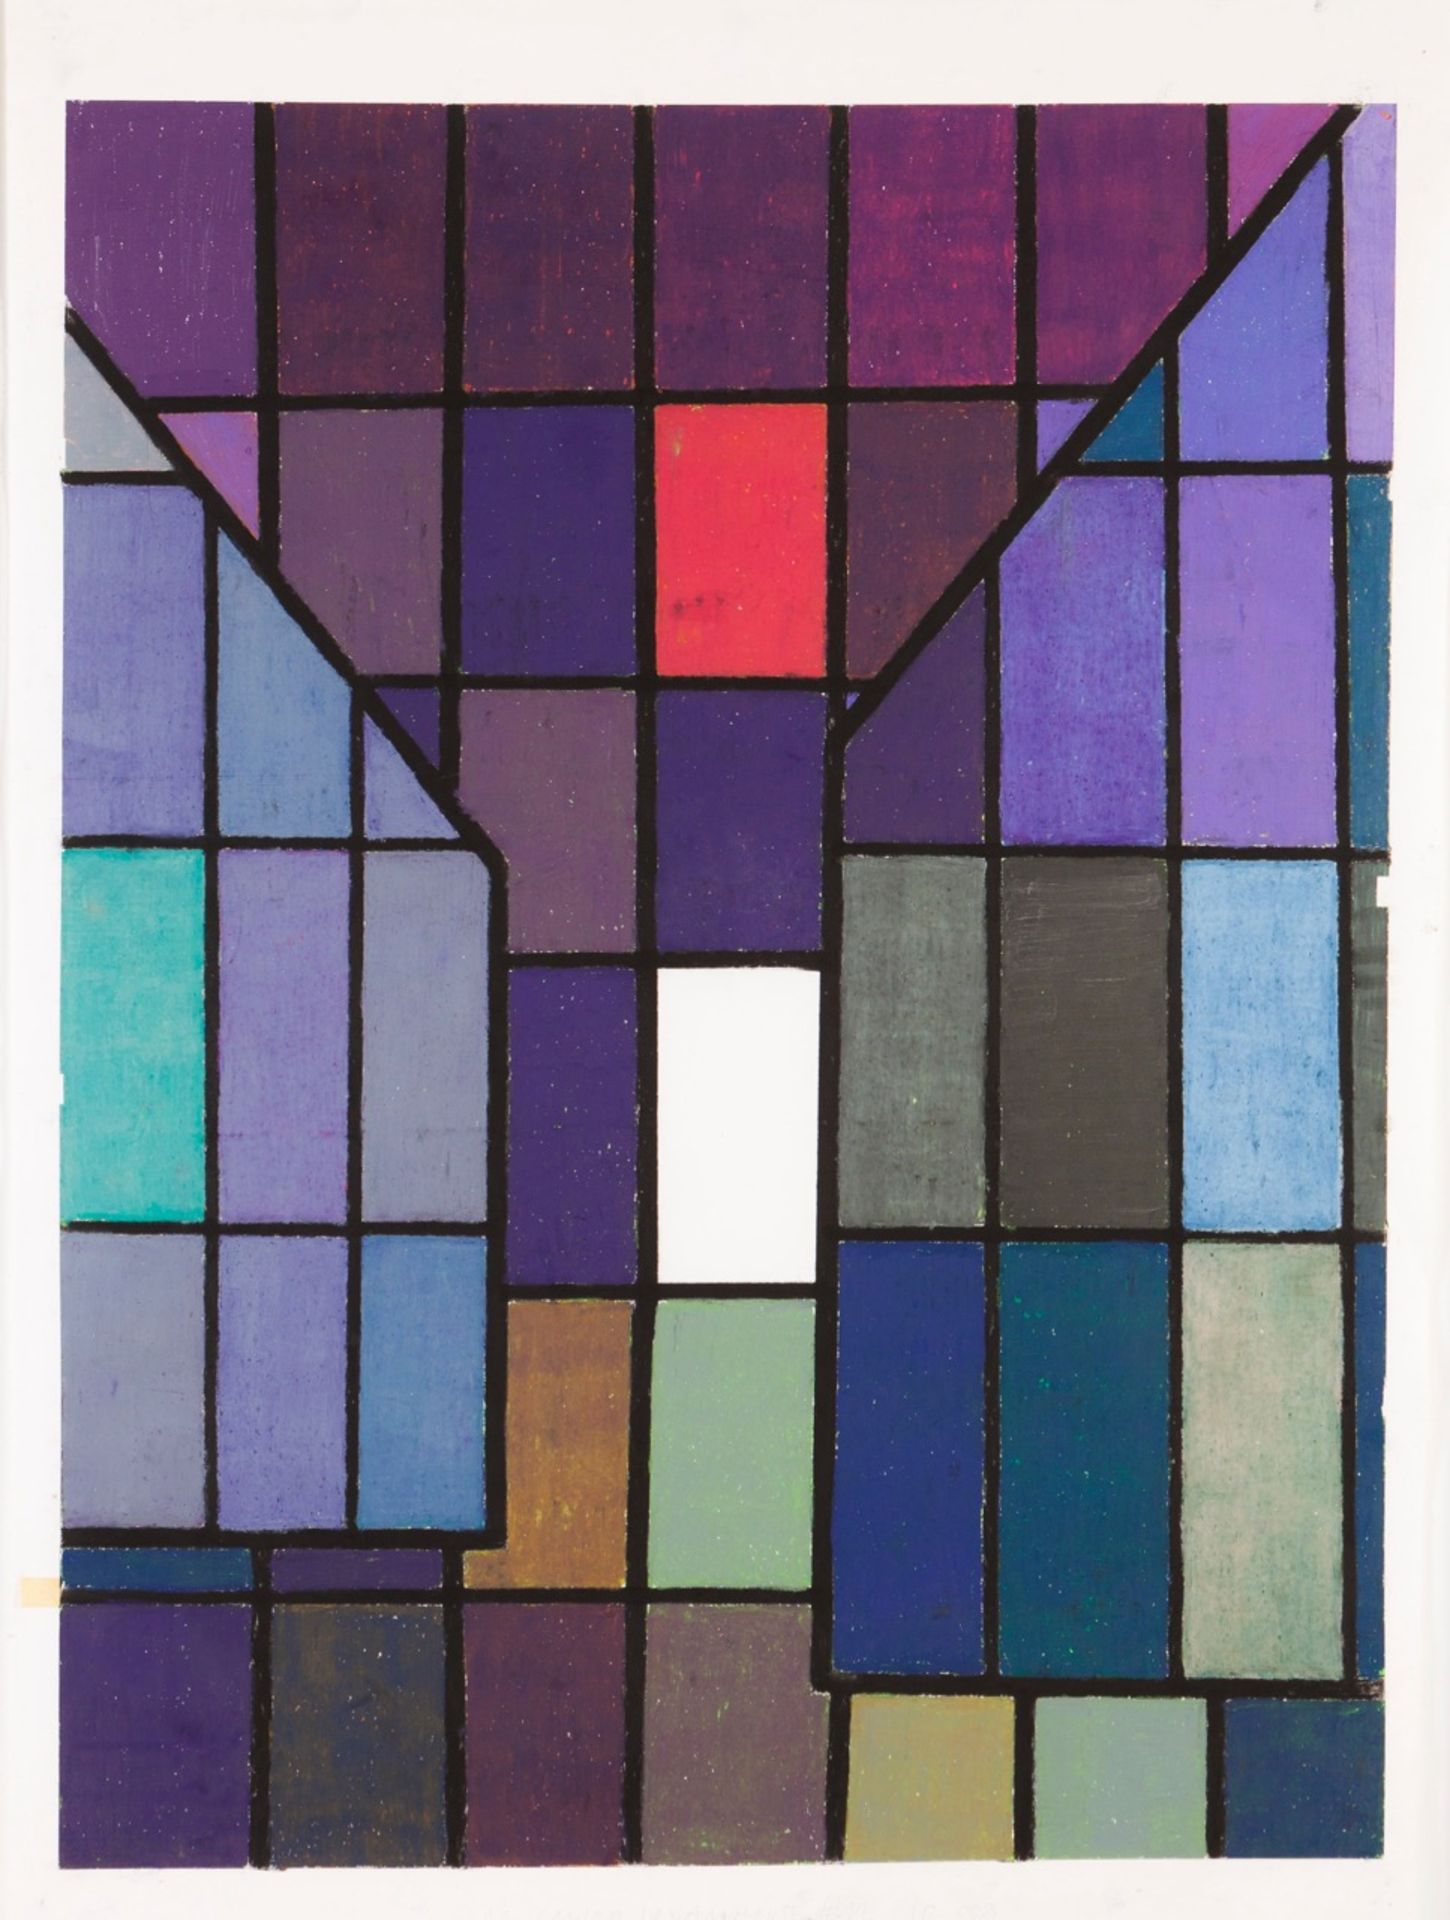 Manuel Caeiro (b.1975)
"Dream house #11"
Pastel on paper
Dated 10.003

123x92 cm